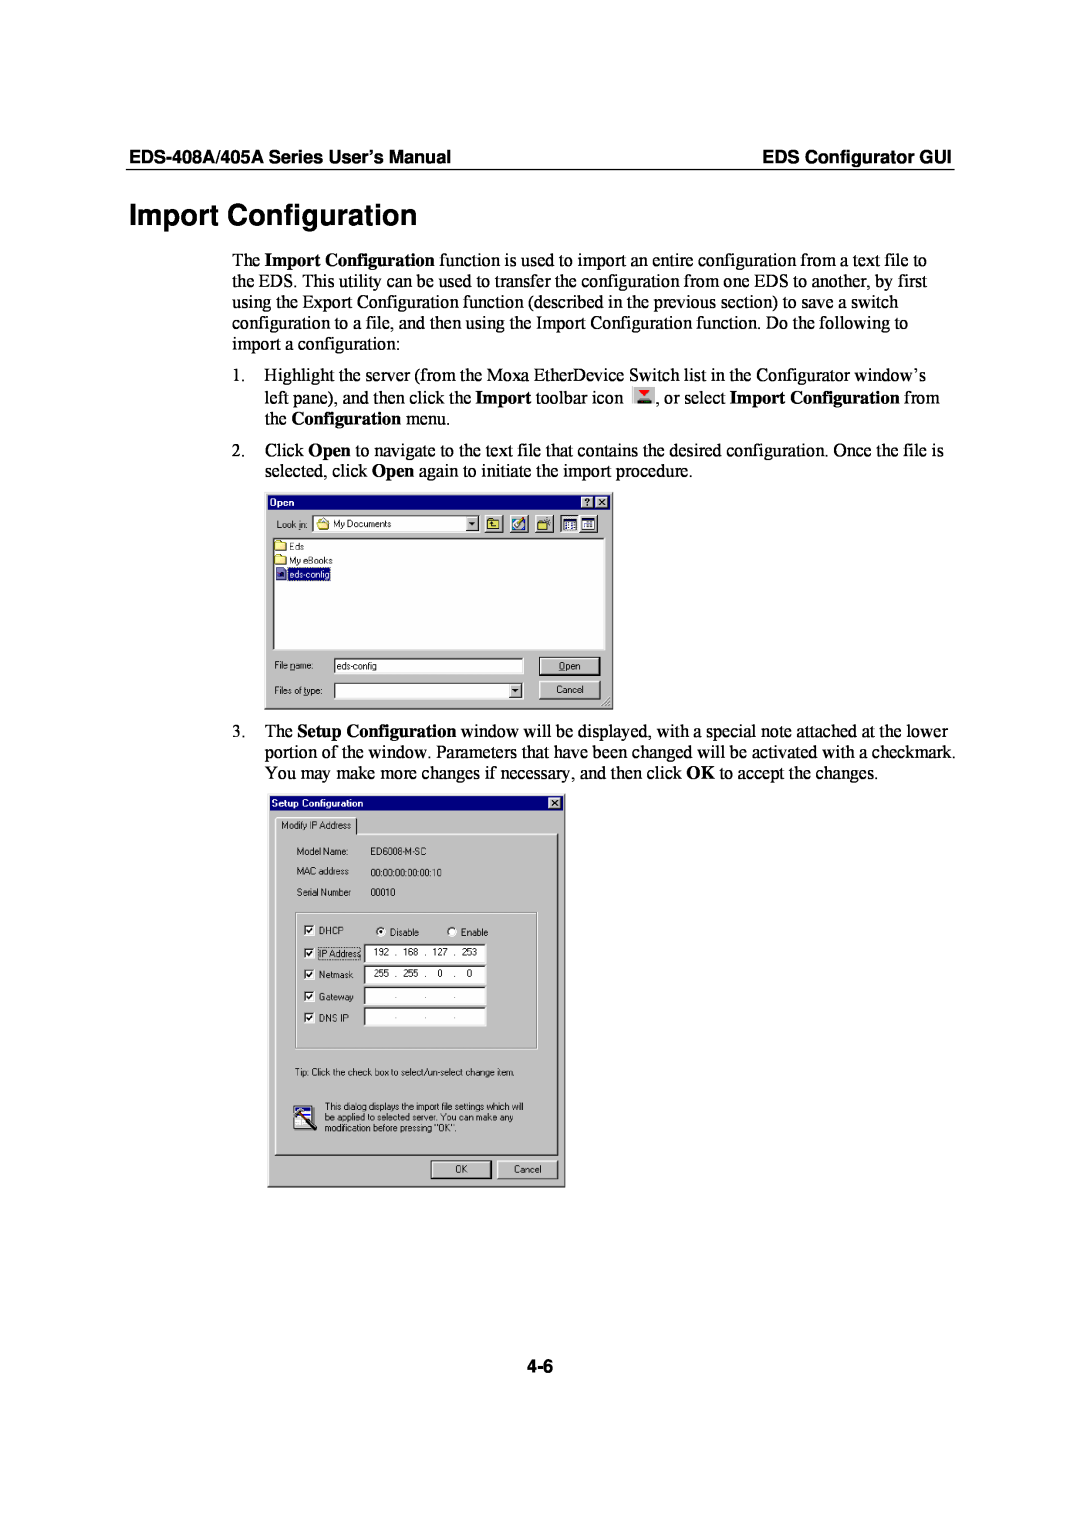 Moxa Technologies EDS-405A user manual Import Configuration, EDS-408A/405A Series User’s Manual, EDS Configurator GUI 